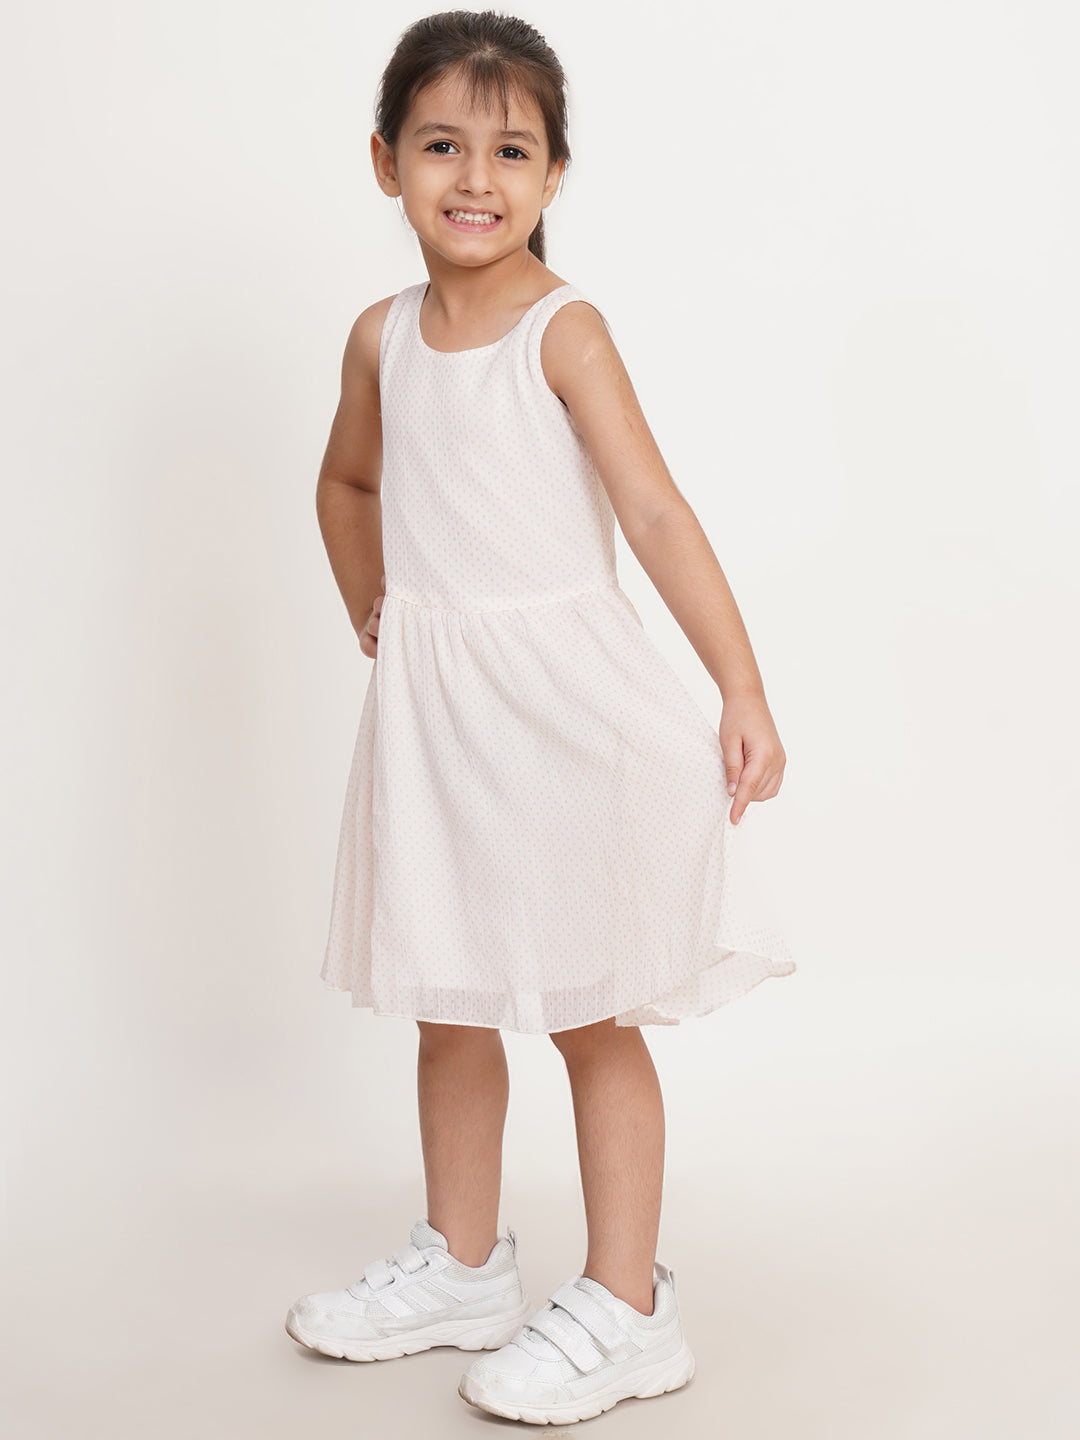 CREATIVE KID'S Girl White Printed A-Line Dress